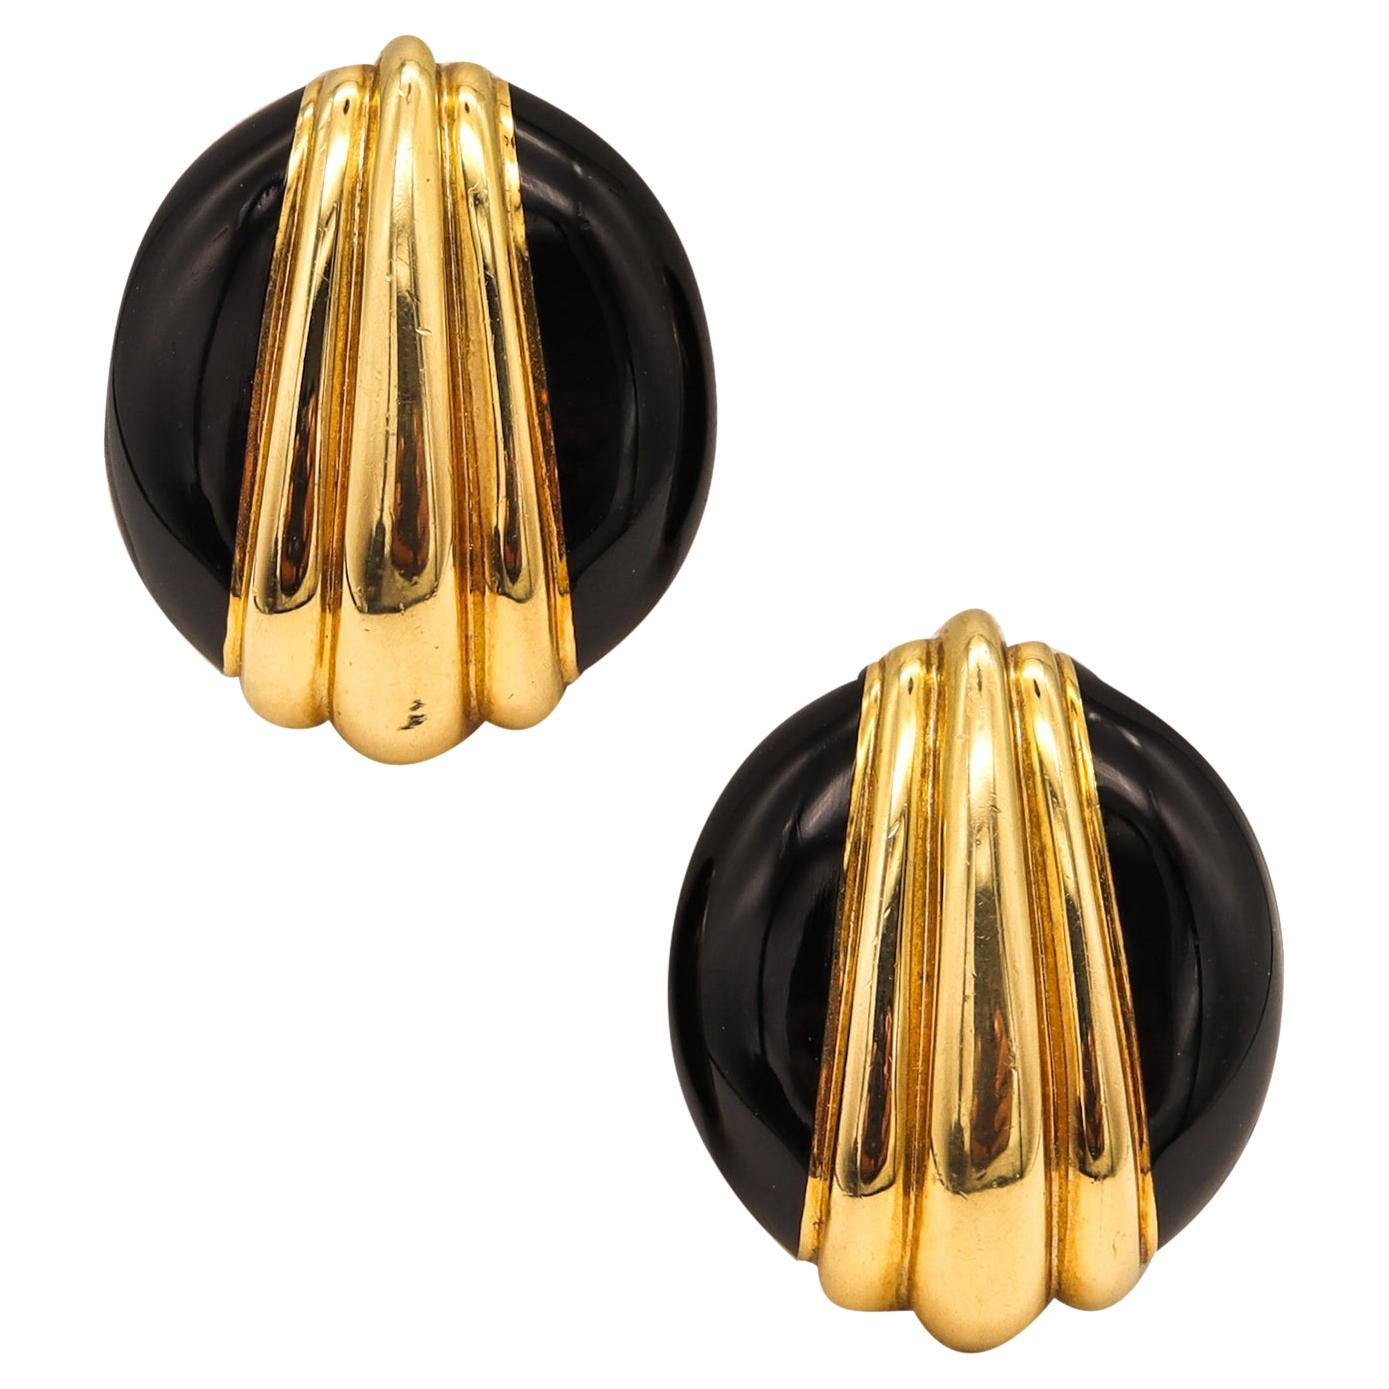 David Webb 1970 New York Black Enameled Clip Earrings in Solid 18Kt Yellow Gold